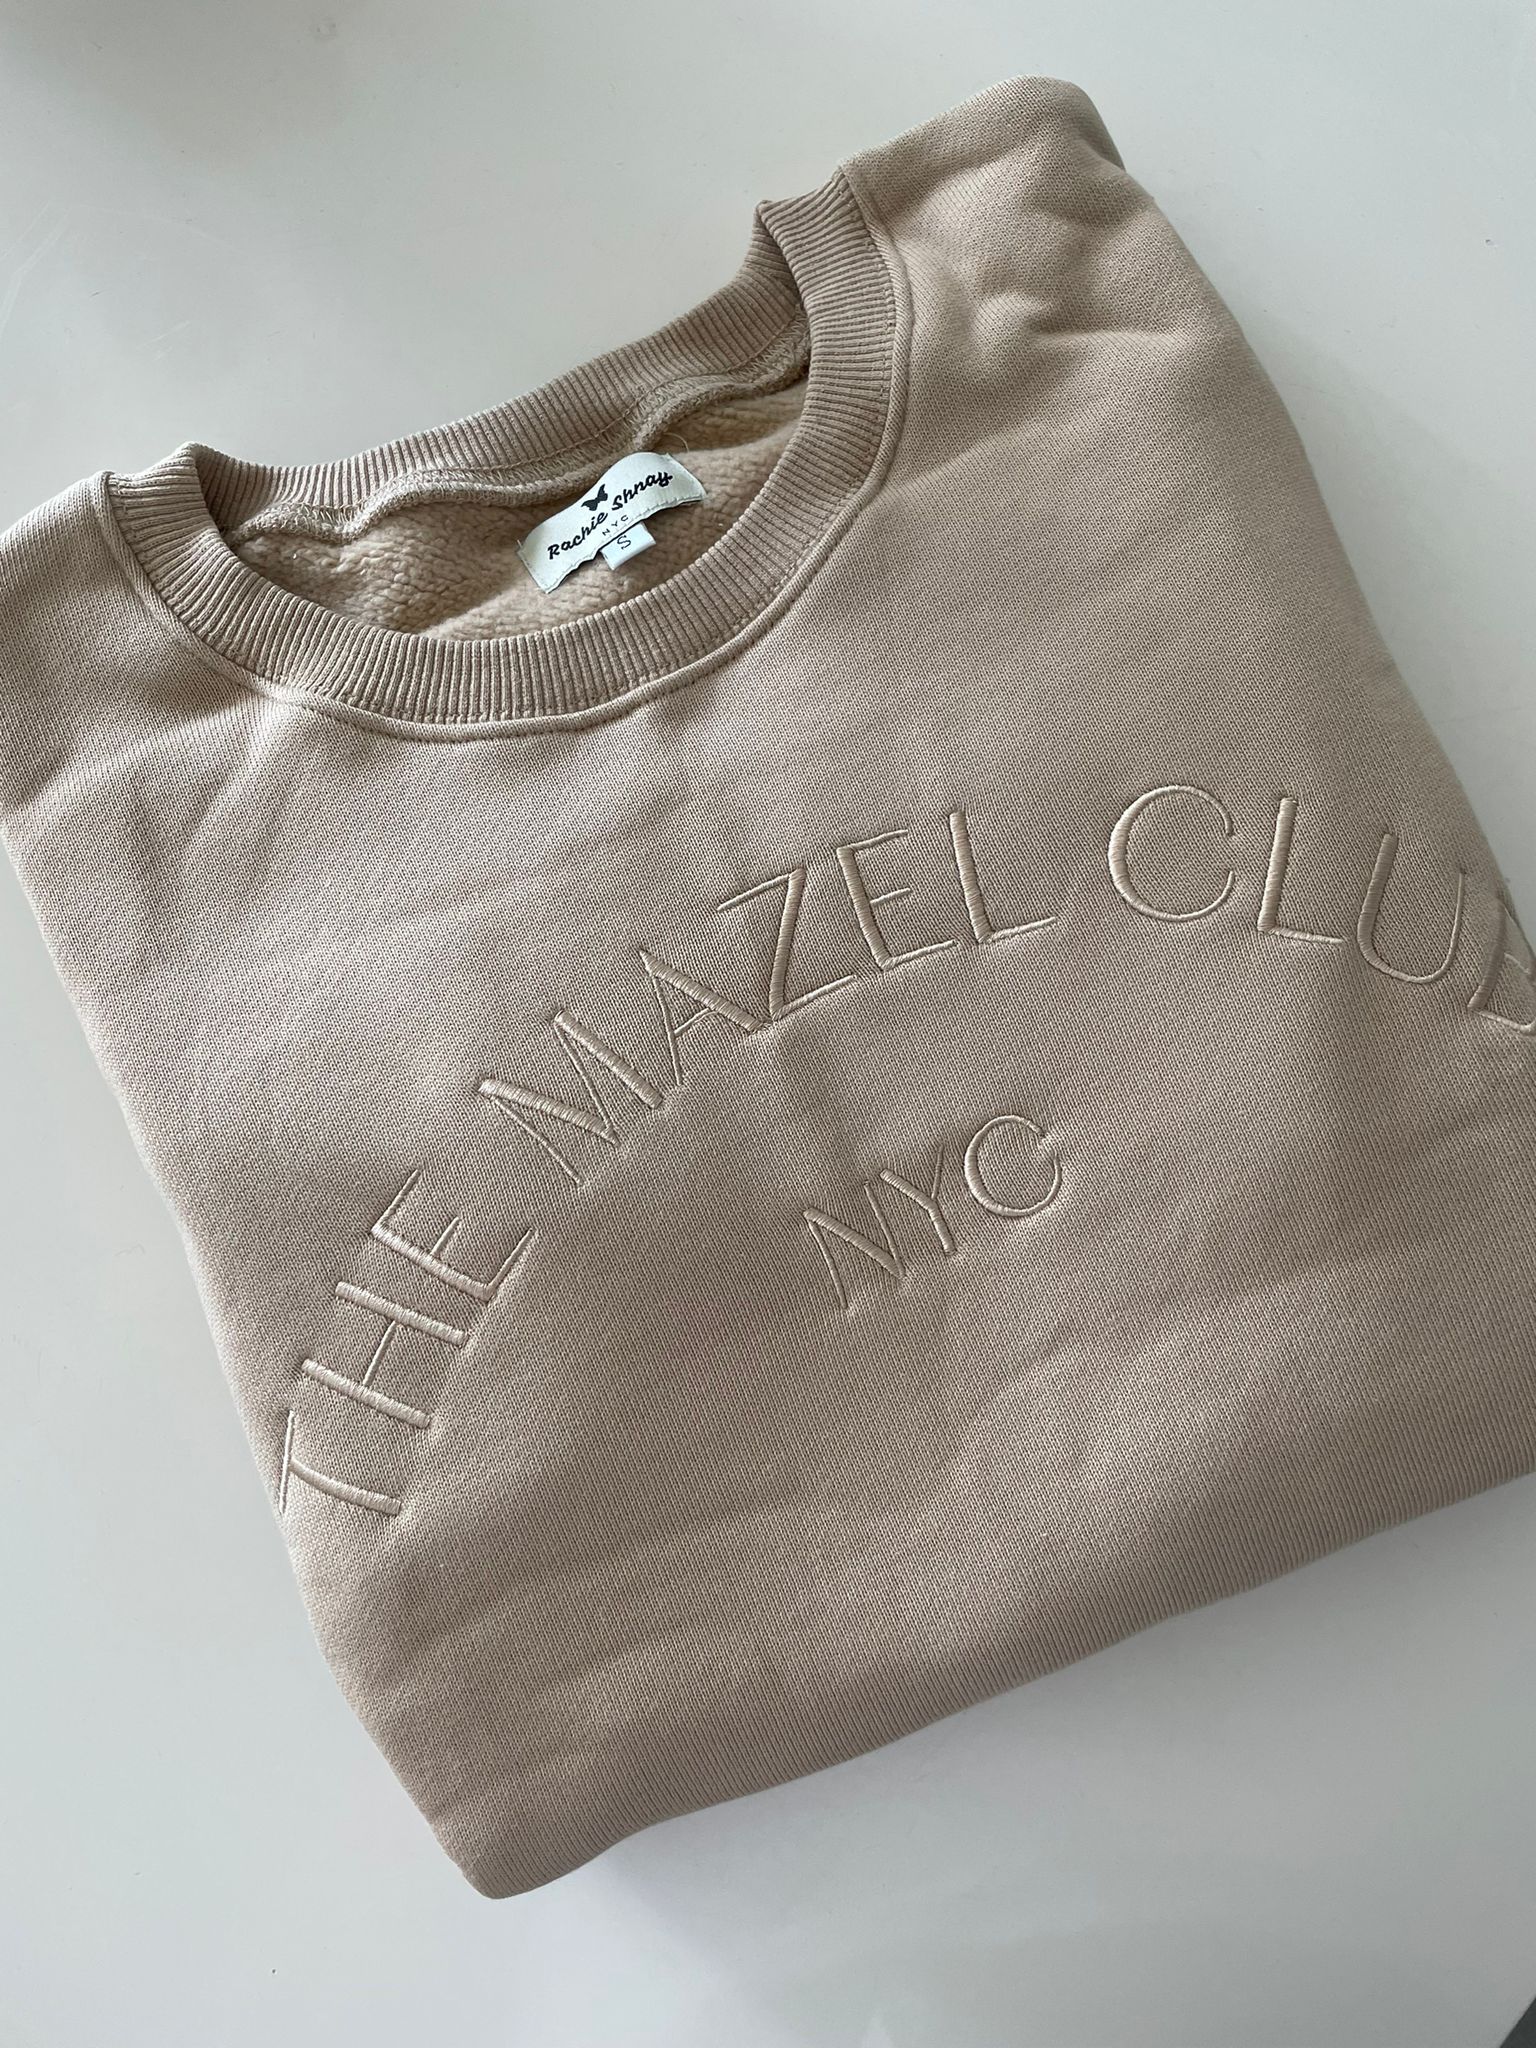 The Mazel Club Sweatshirt